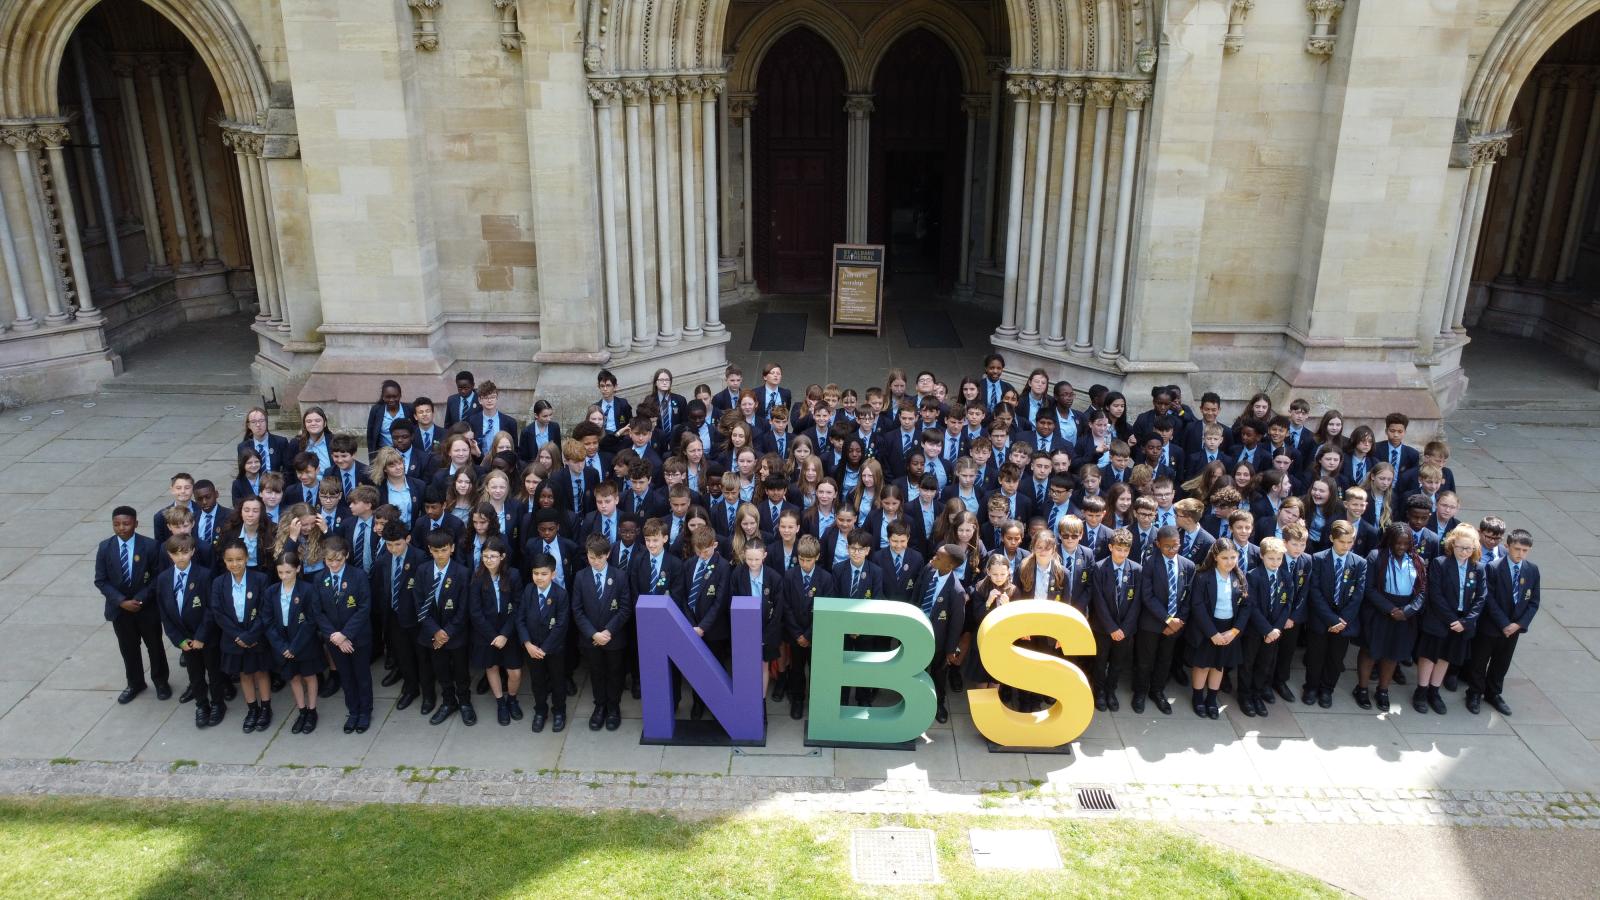 Nicholas Breakspear School celebrates 60th anniversary